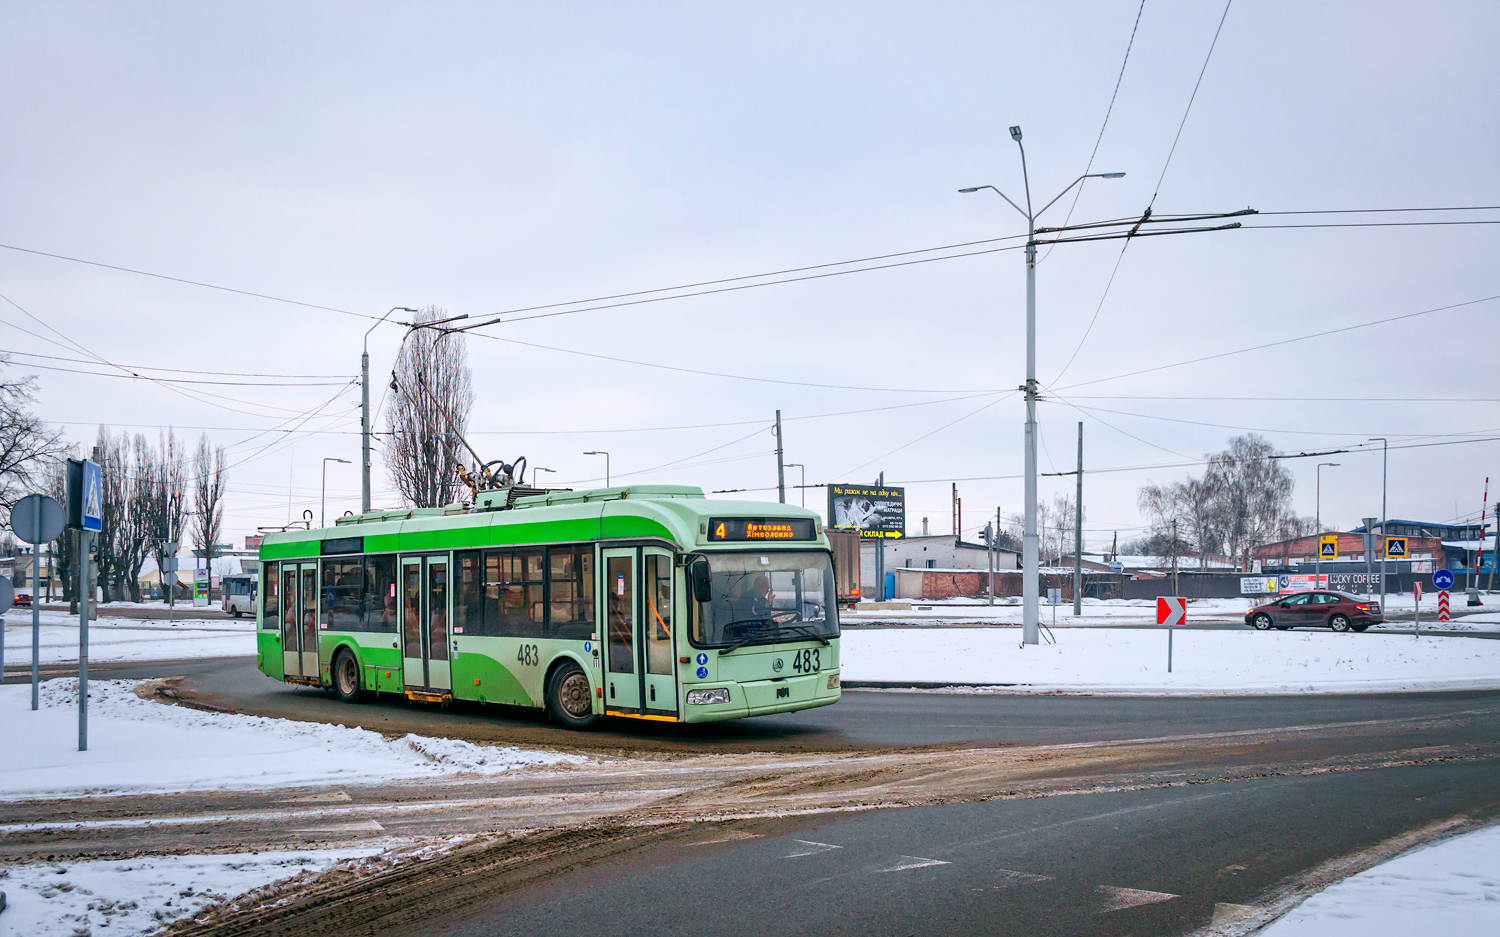 Čerņihiva, Etalon-BKM 321 № 483; Čerņihiva — Historical photos of the pre-war period; Čerņihiva — Trolleybus lines